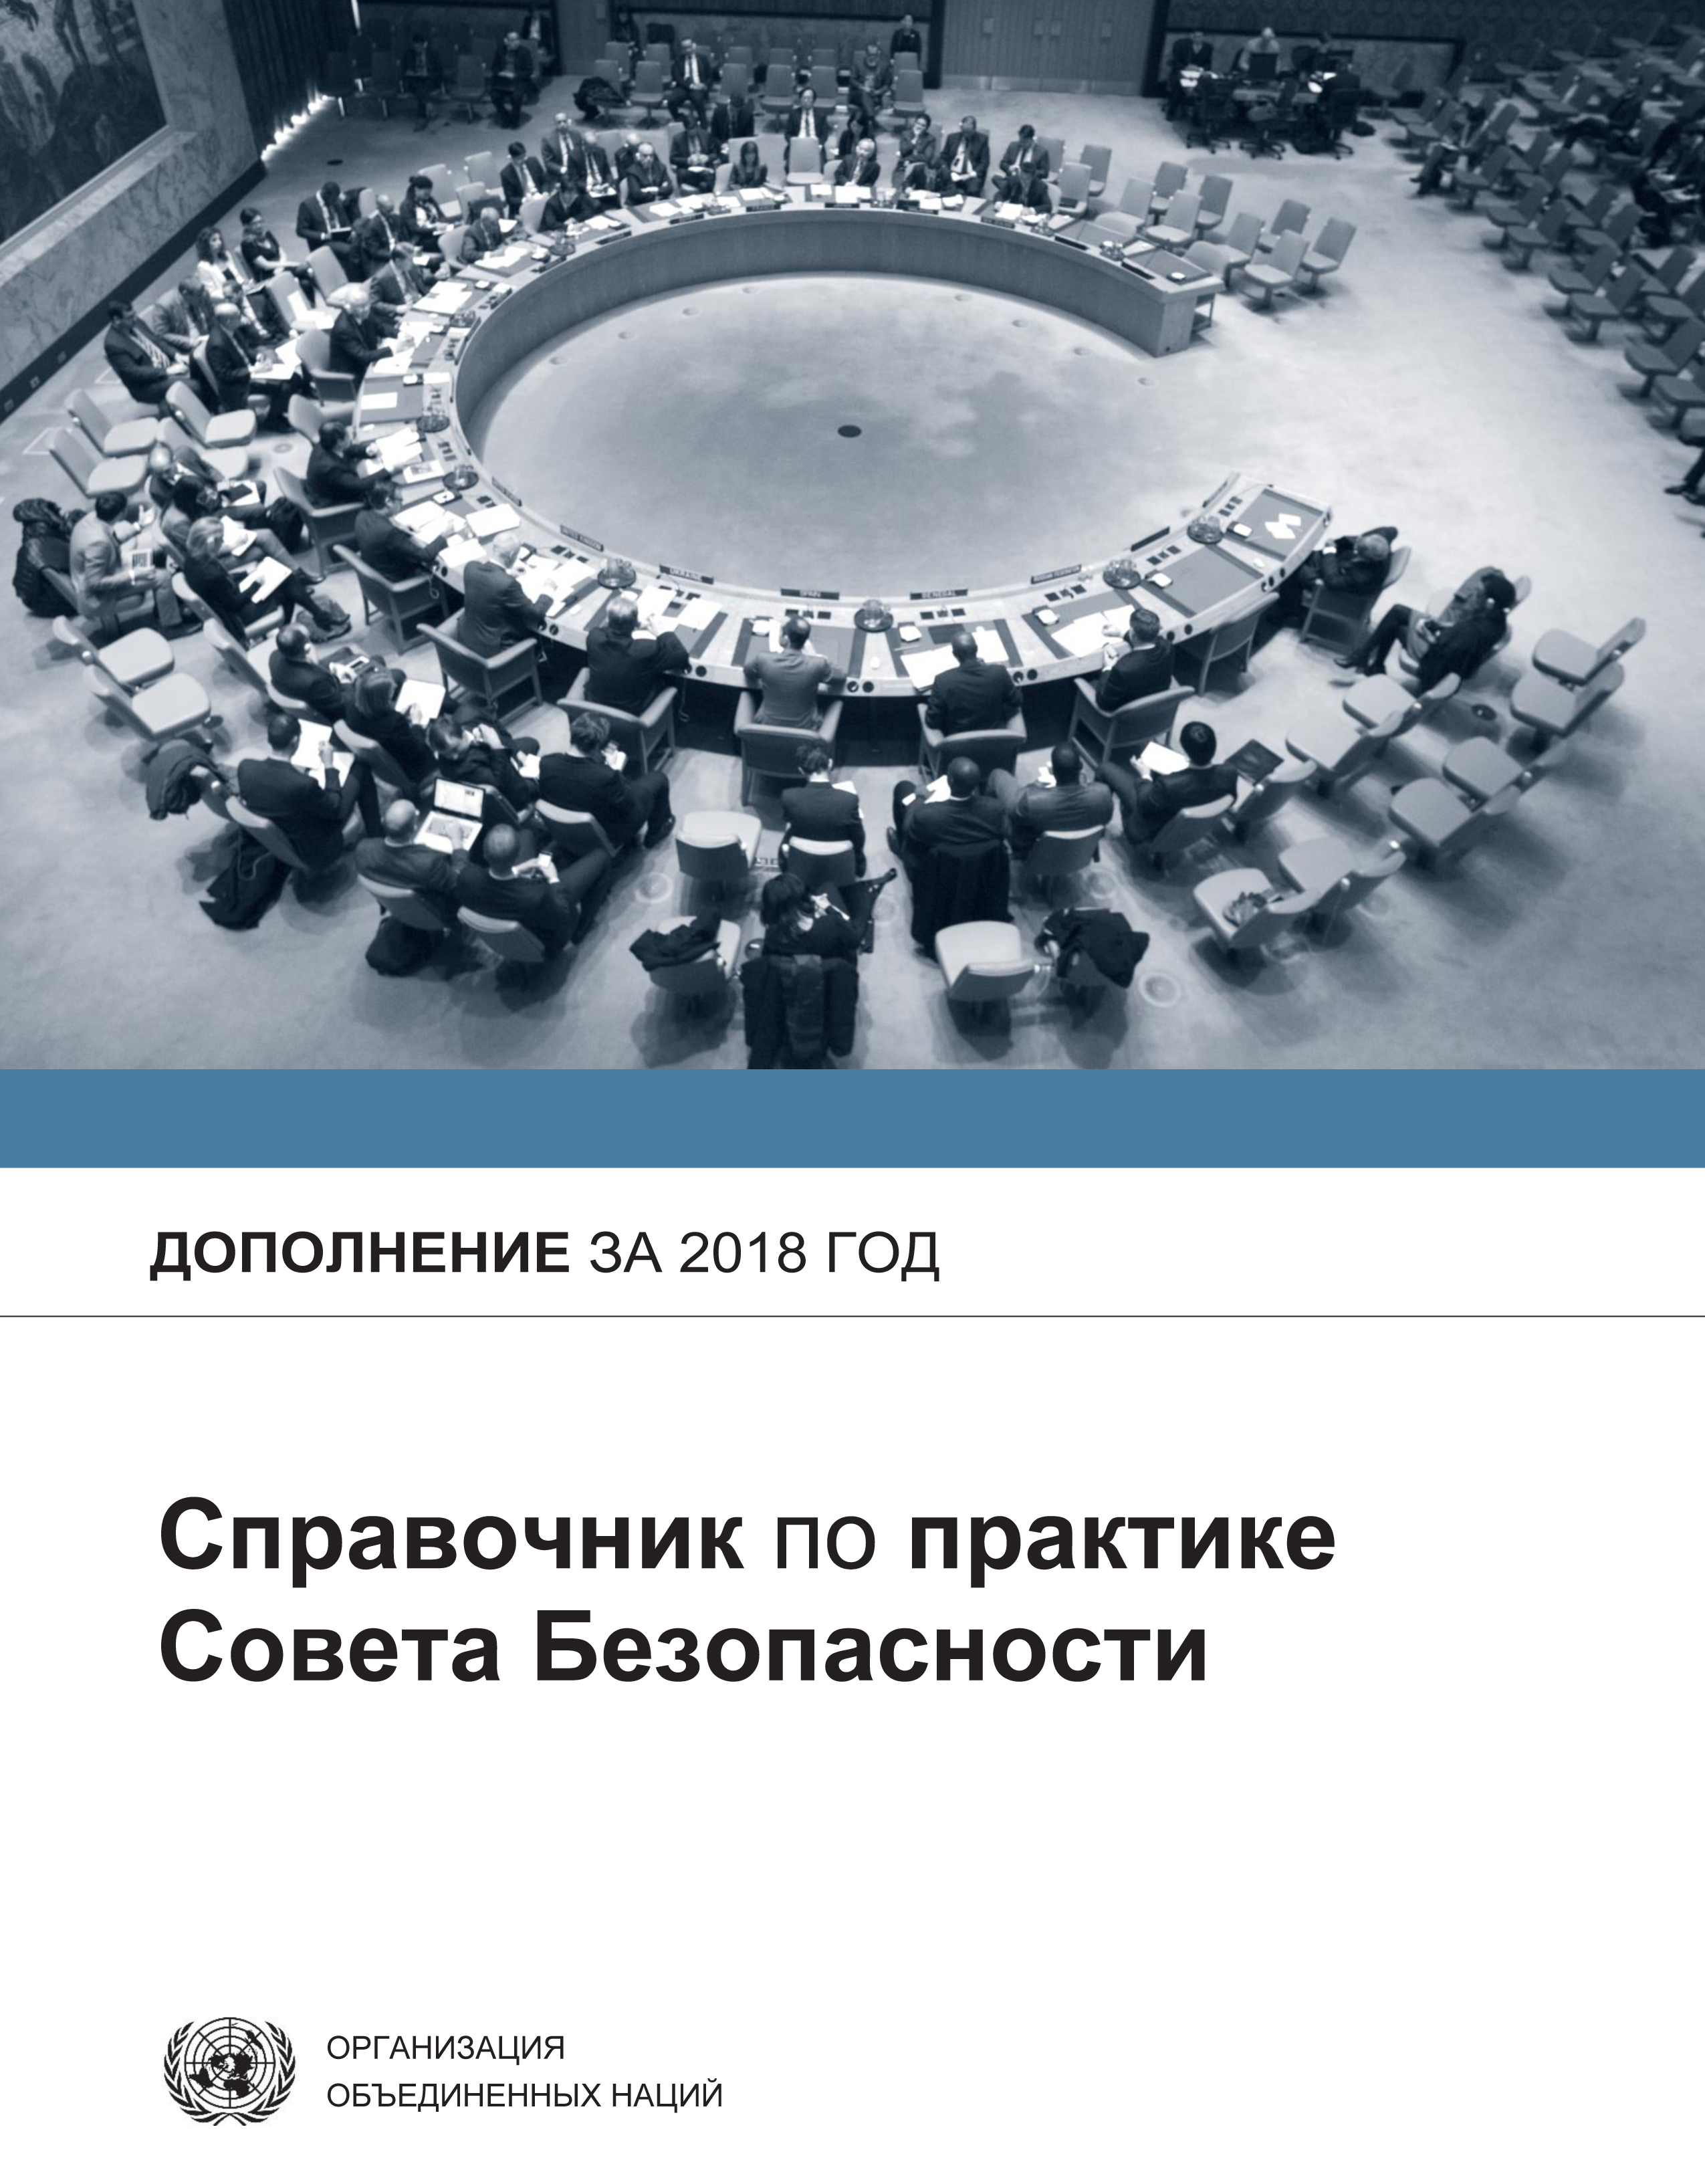 image of Справочник по практике совета безопасности: дополнение за 2018 год